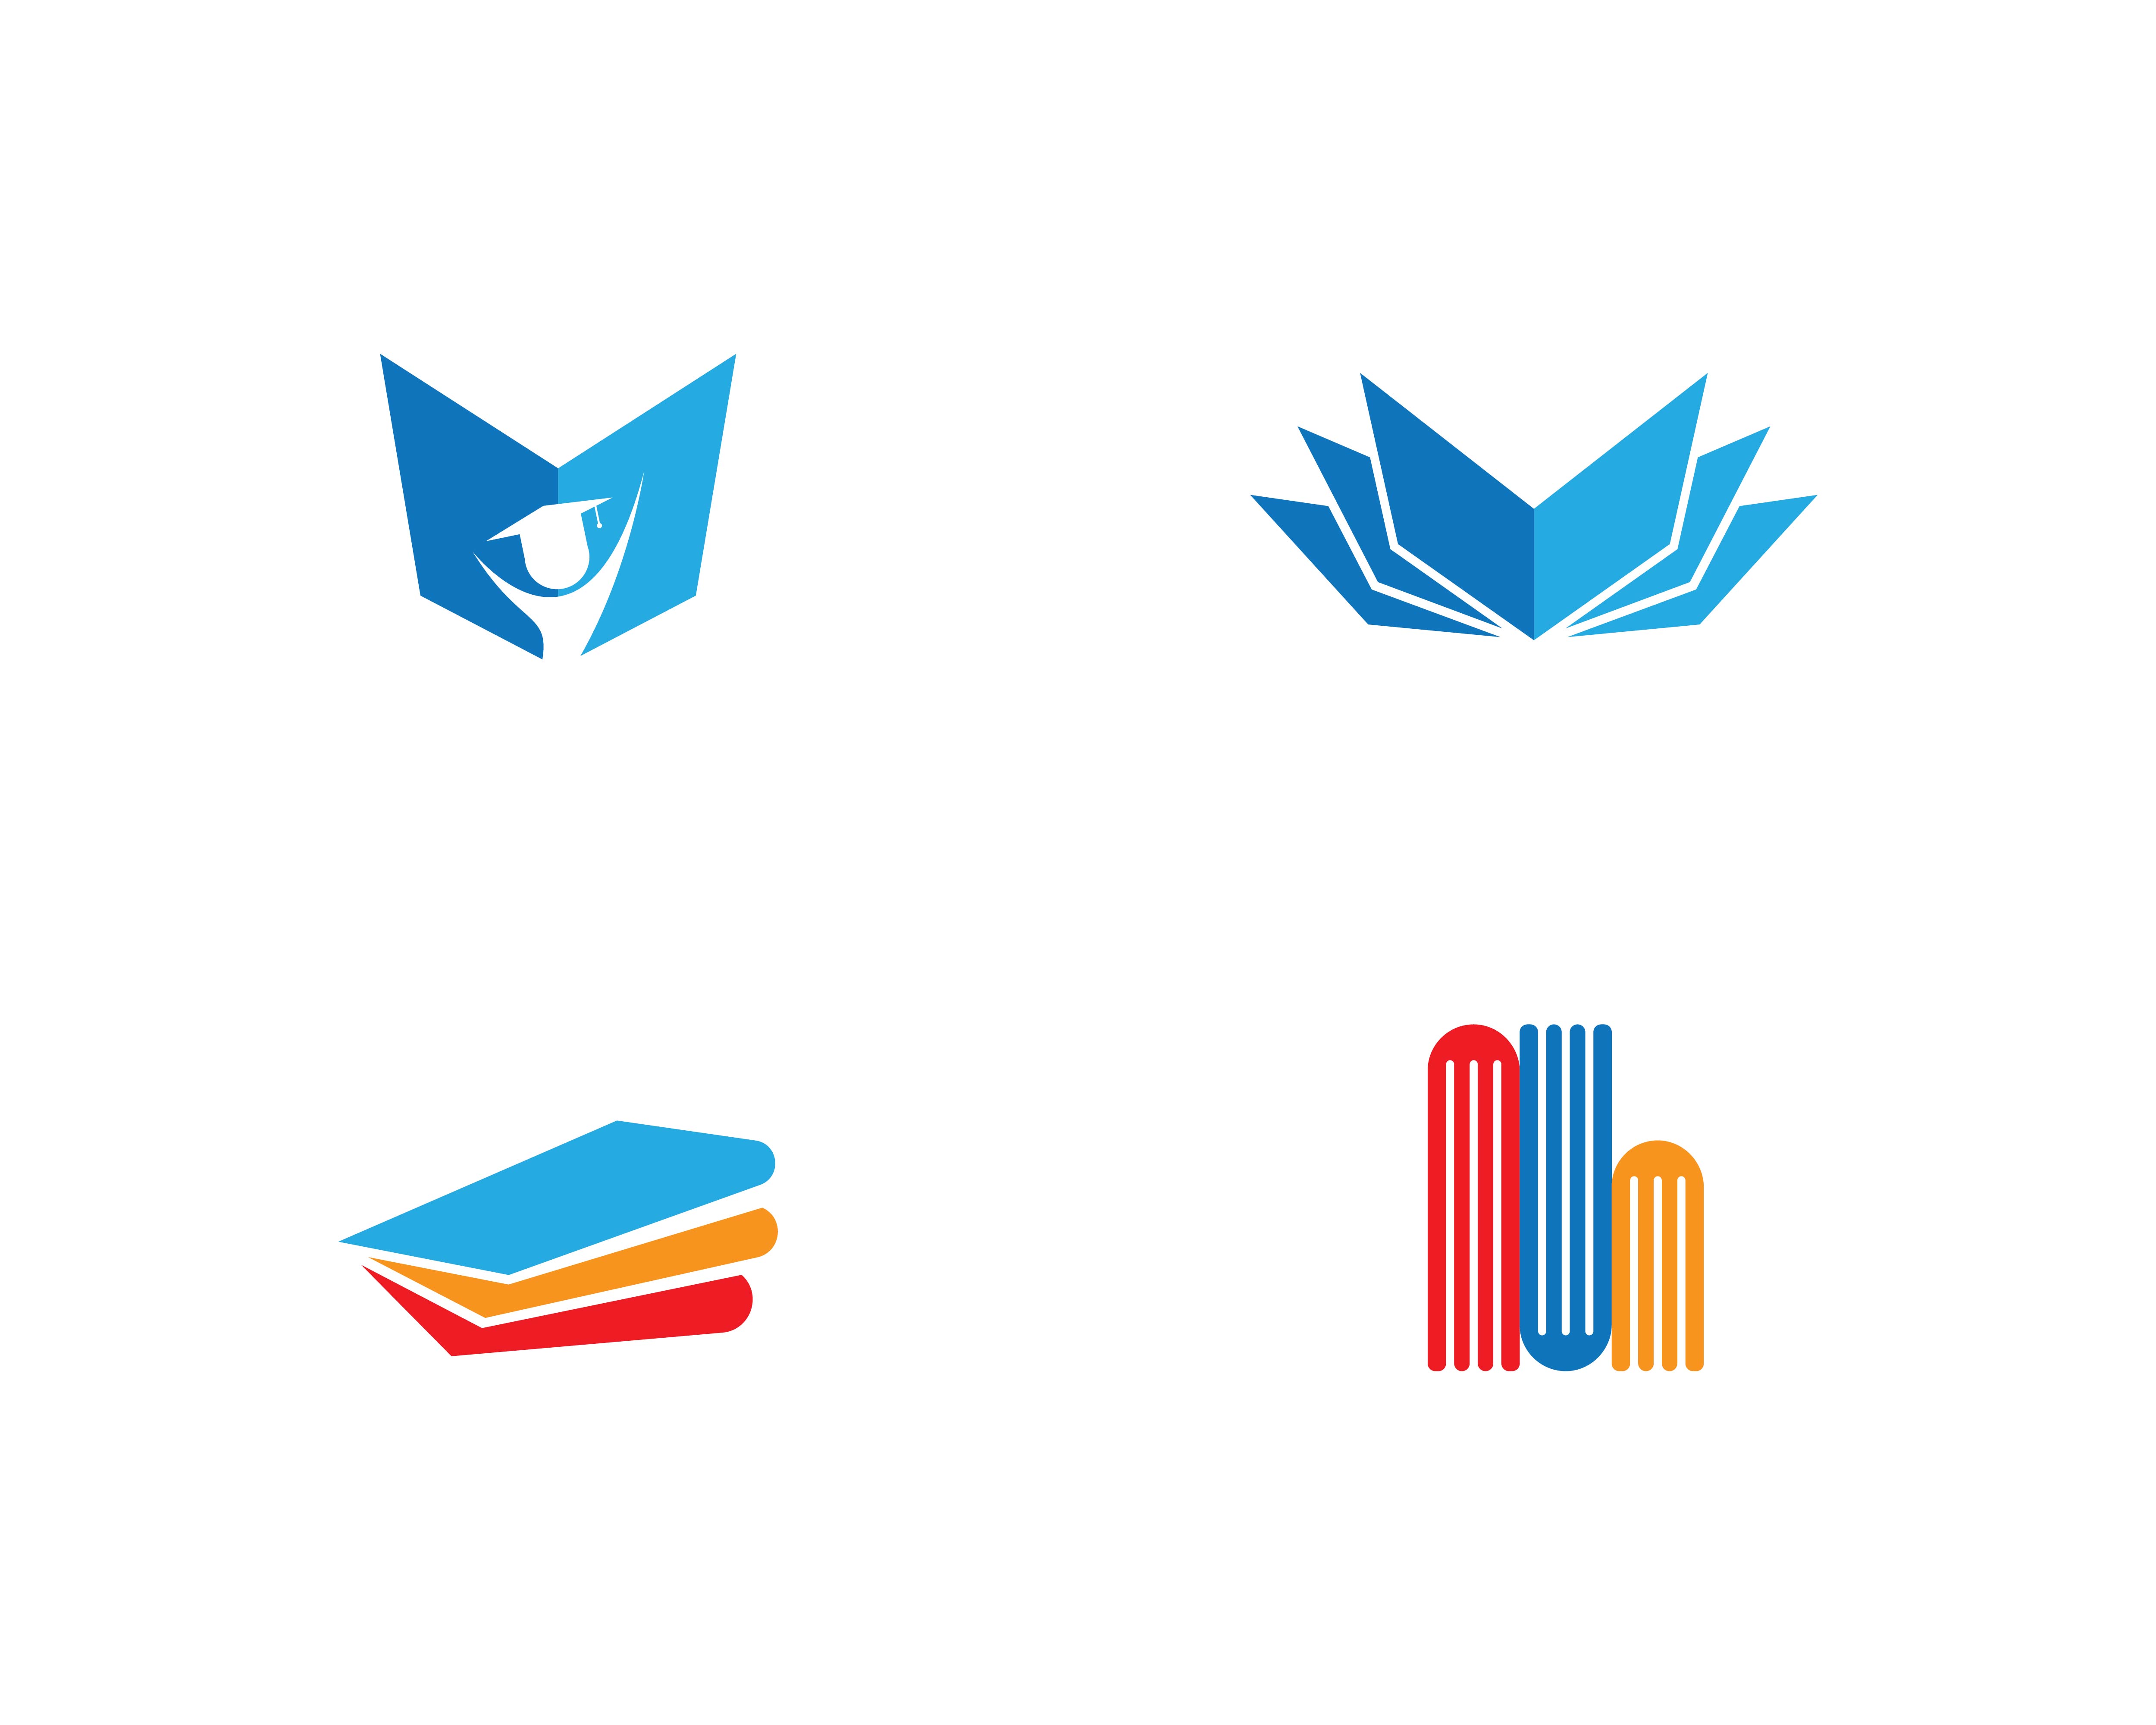  Book logo  icon Download Free Vectors Clipart Graphics 